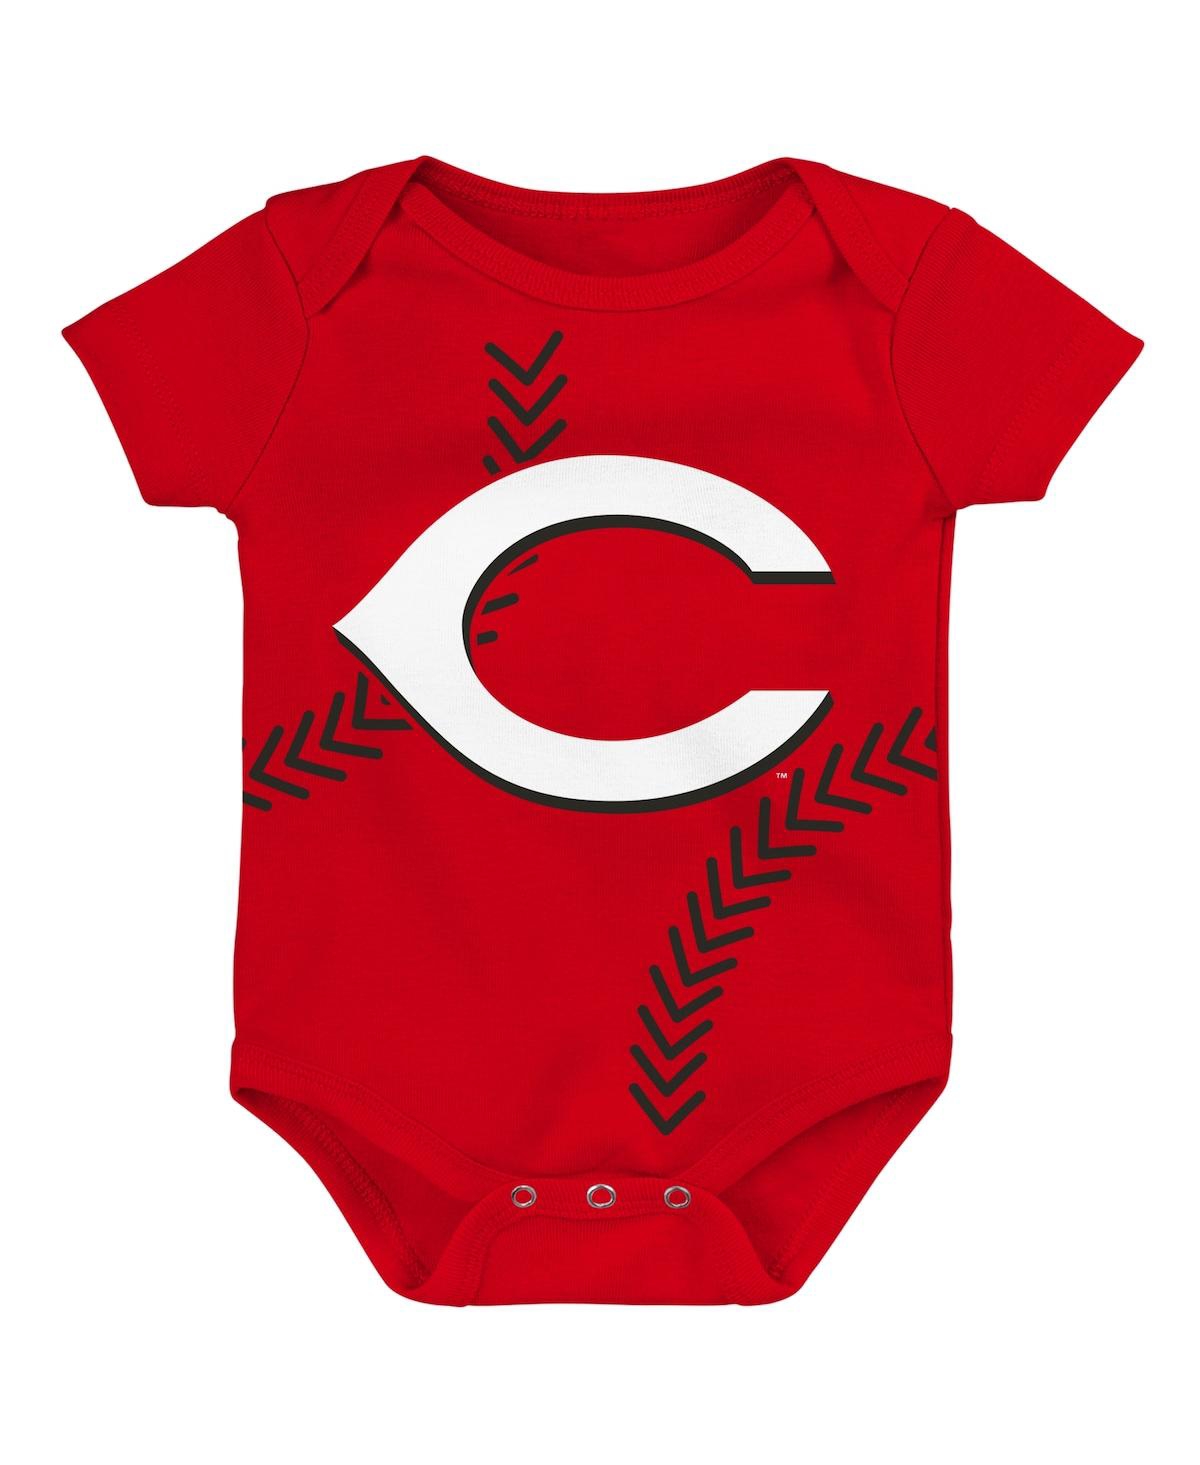 Outerstuff Babies' Newborn And Infant Boys And Girls Red Cincinnati Reds Running Home Bodysuit